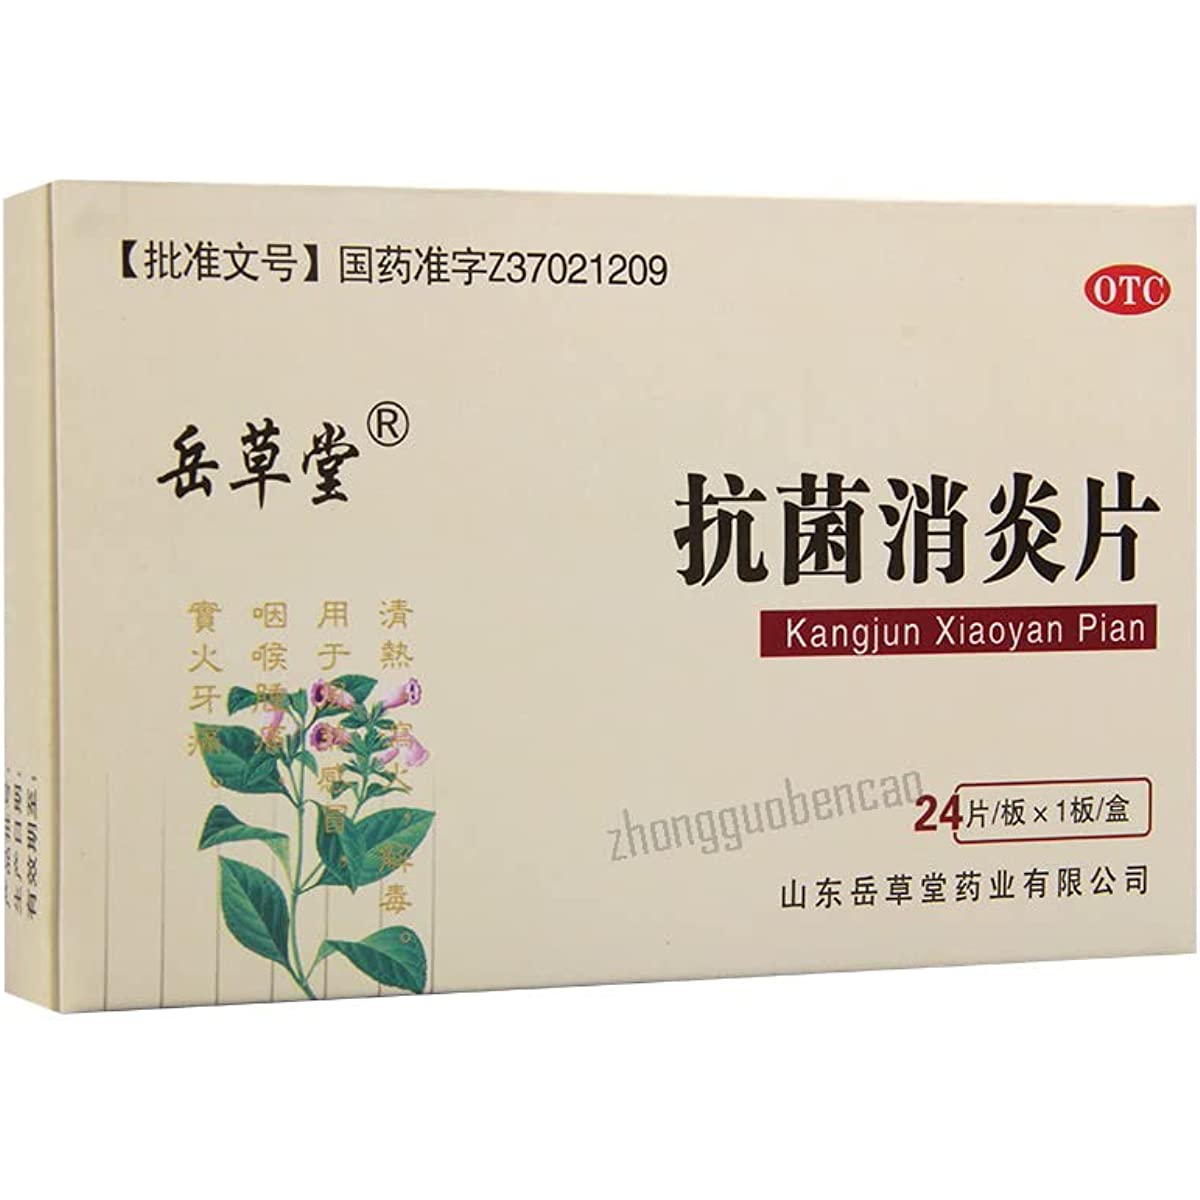 1 Box, Kangjun Xiaoyan Pian 24 Tablets / Box 抗菌消炎片